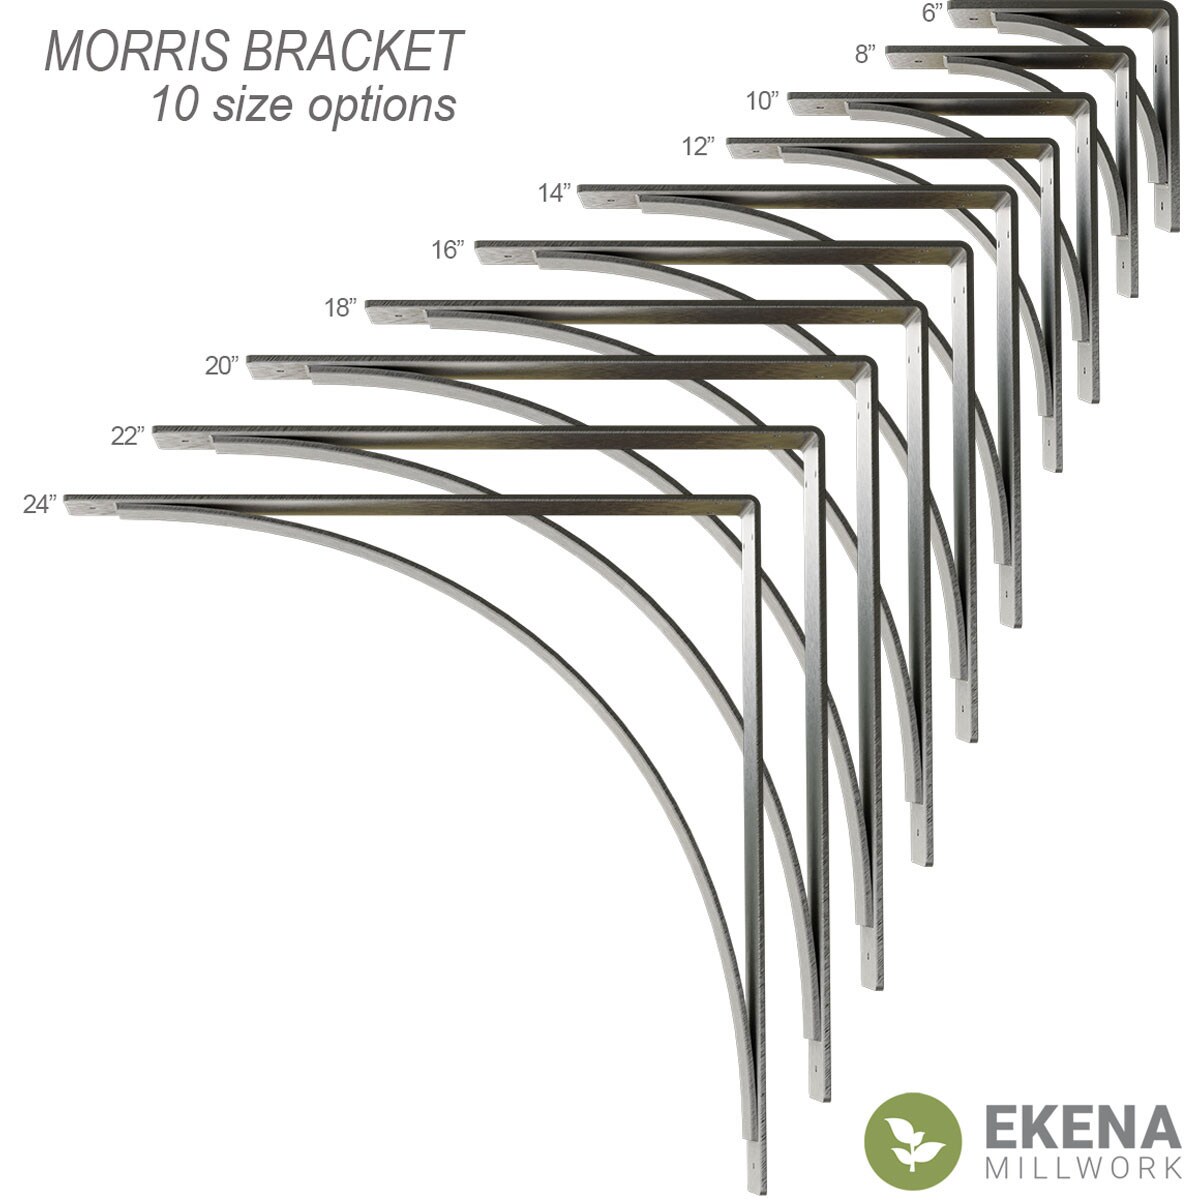 Ekena Millwork Morris 24-in x 3-in x 24-in White Steel Mounting Bracket